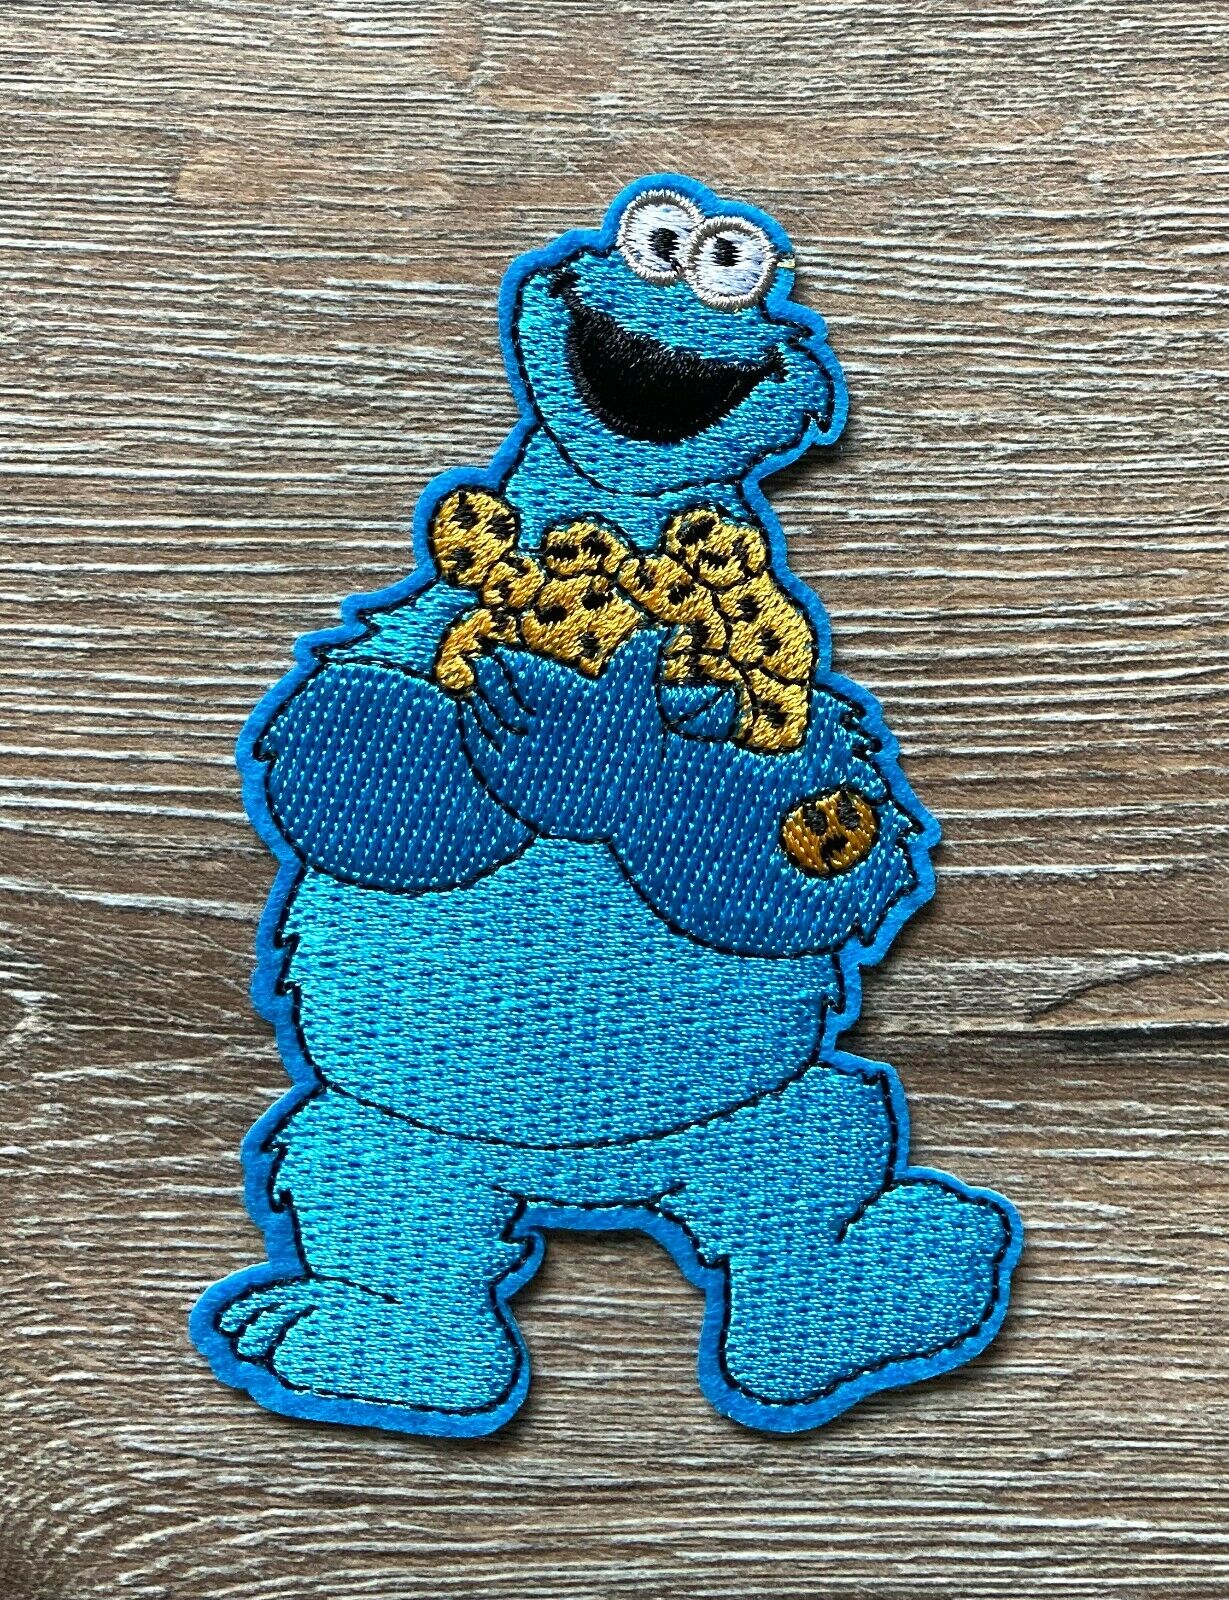 Krümelmonster Patch Aufnäher Bügelbild Cookie Monster Muppet Show  Sesamstraße 